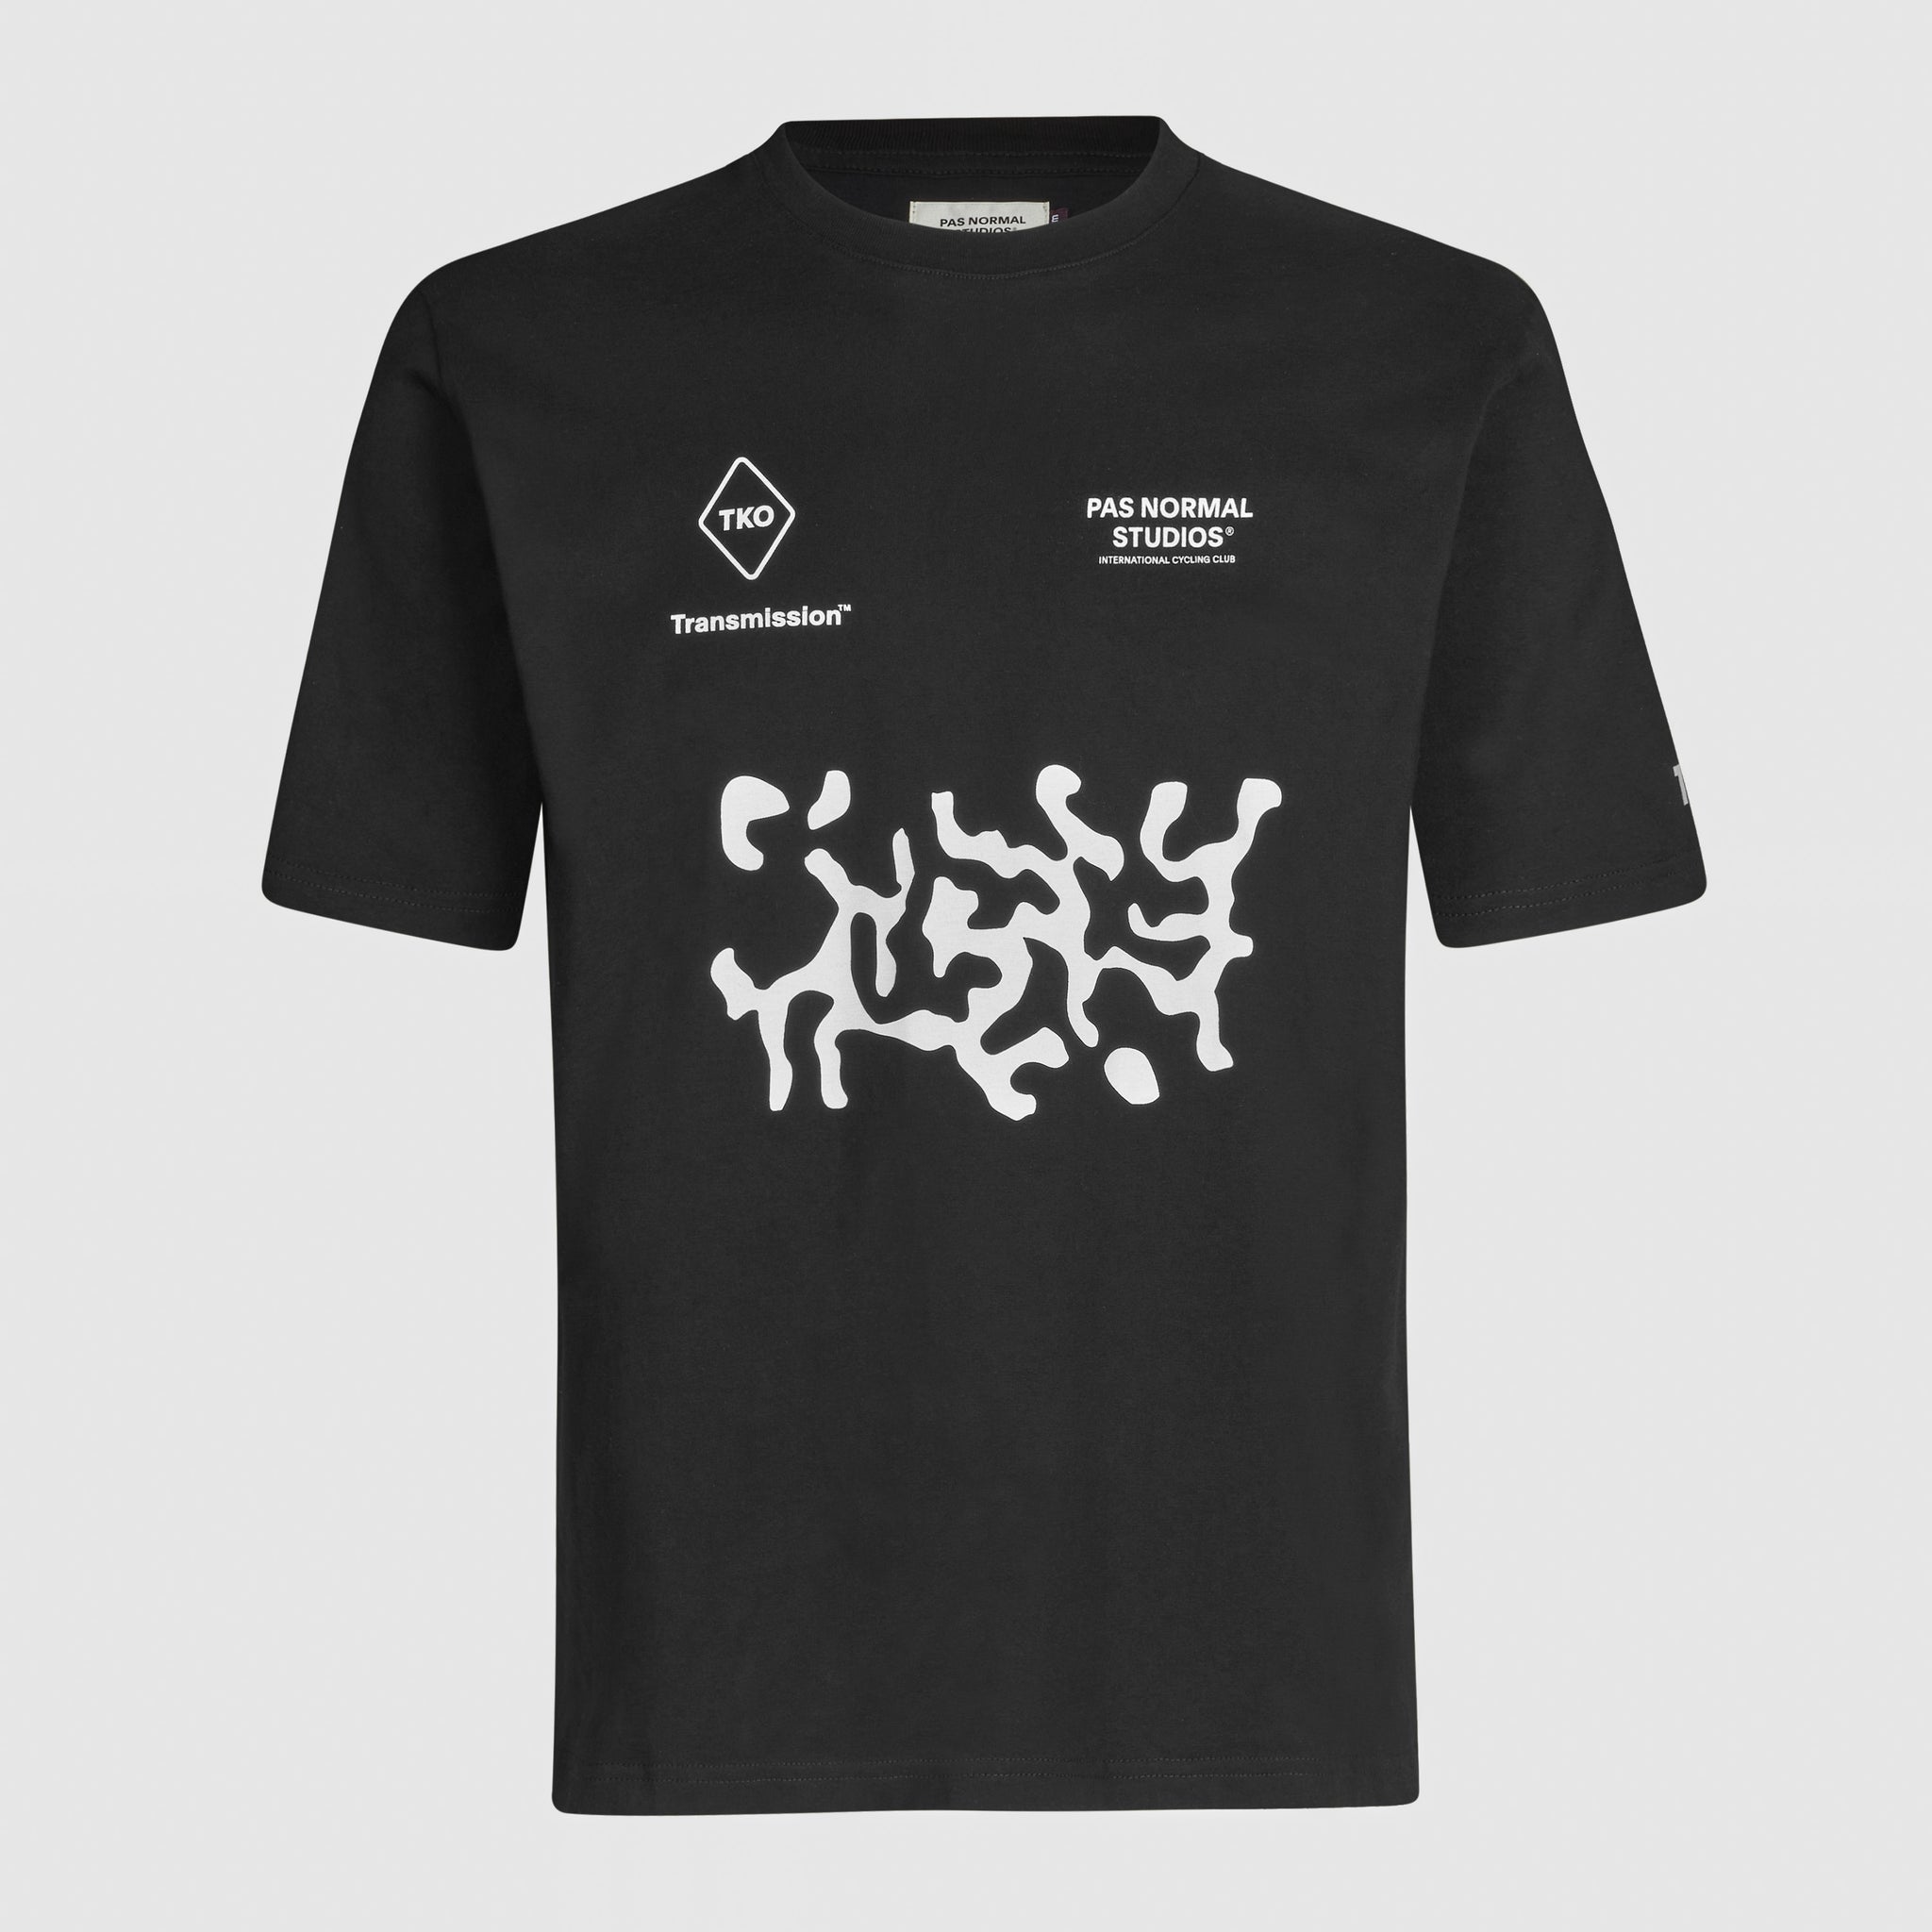 Off-Race T.K.O. Transmission T-Shirt - Black